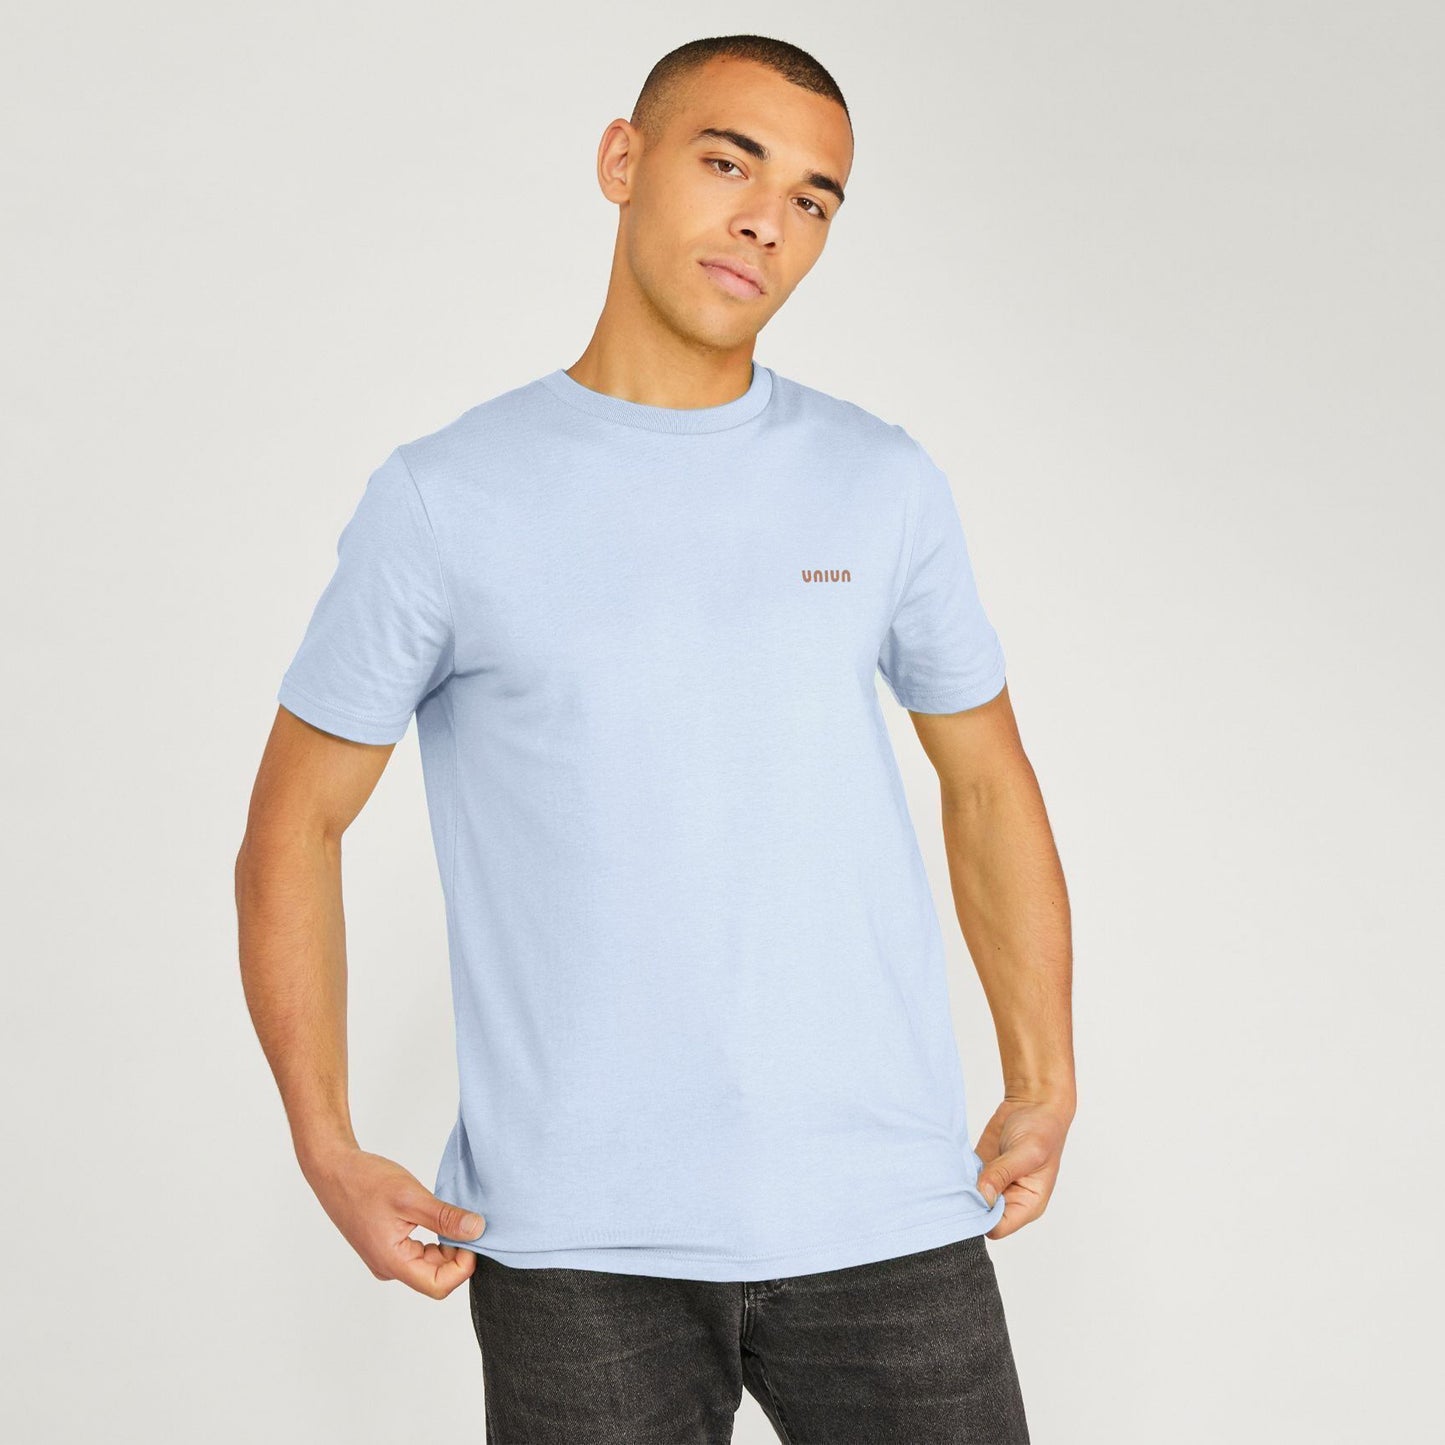 Men's UNIUN Ice Blue T-shirt